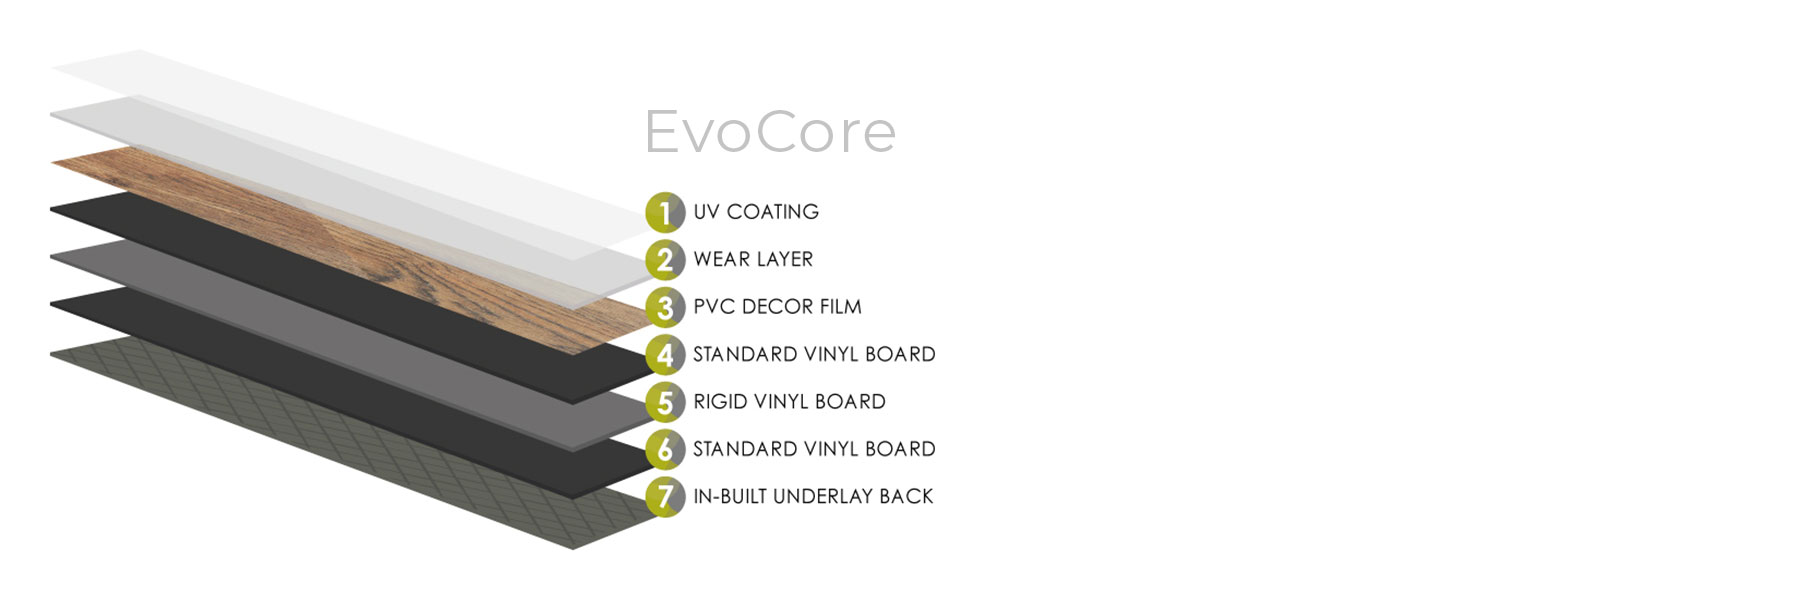 EvoCore flooring composition